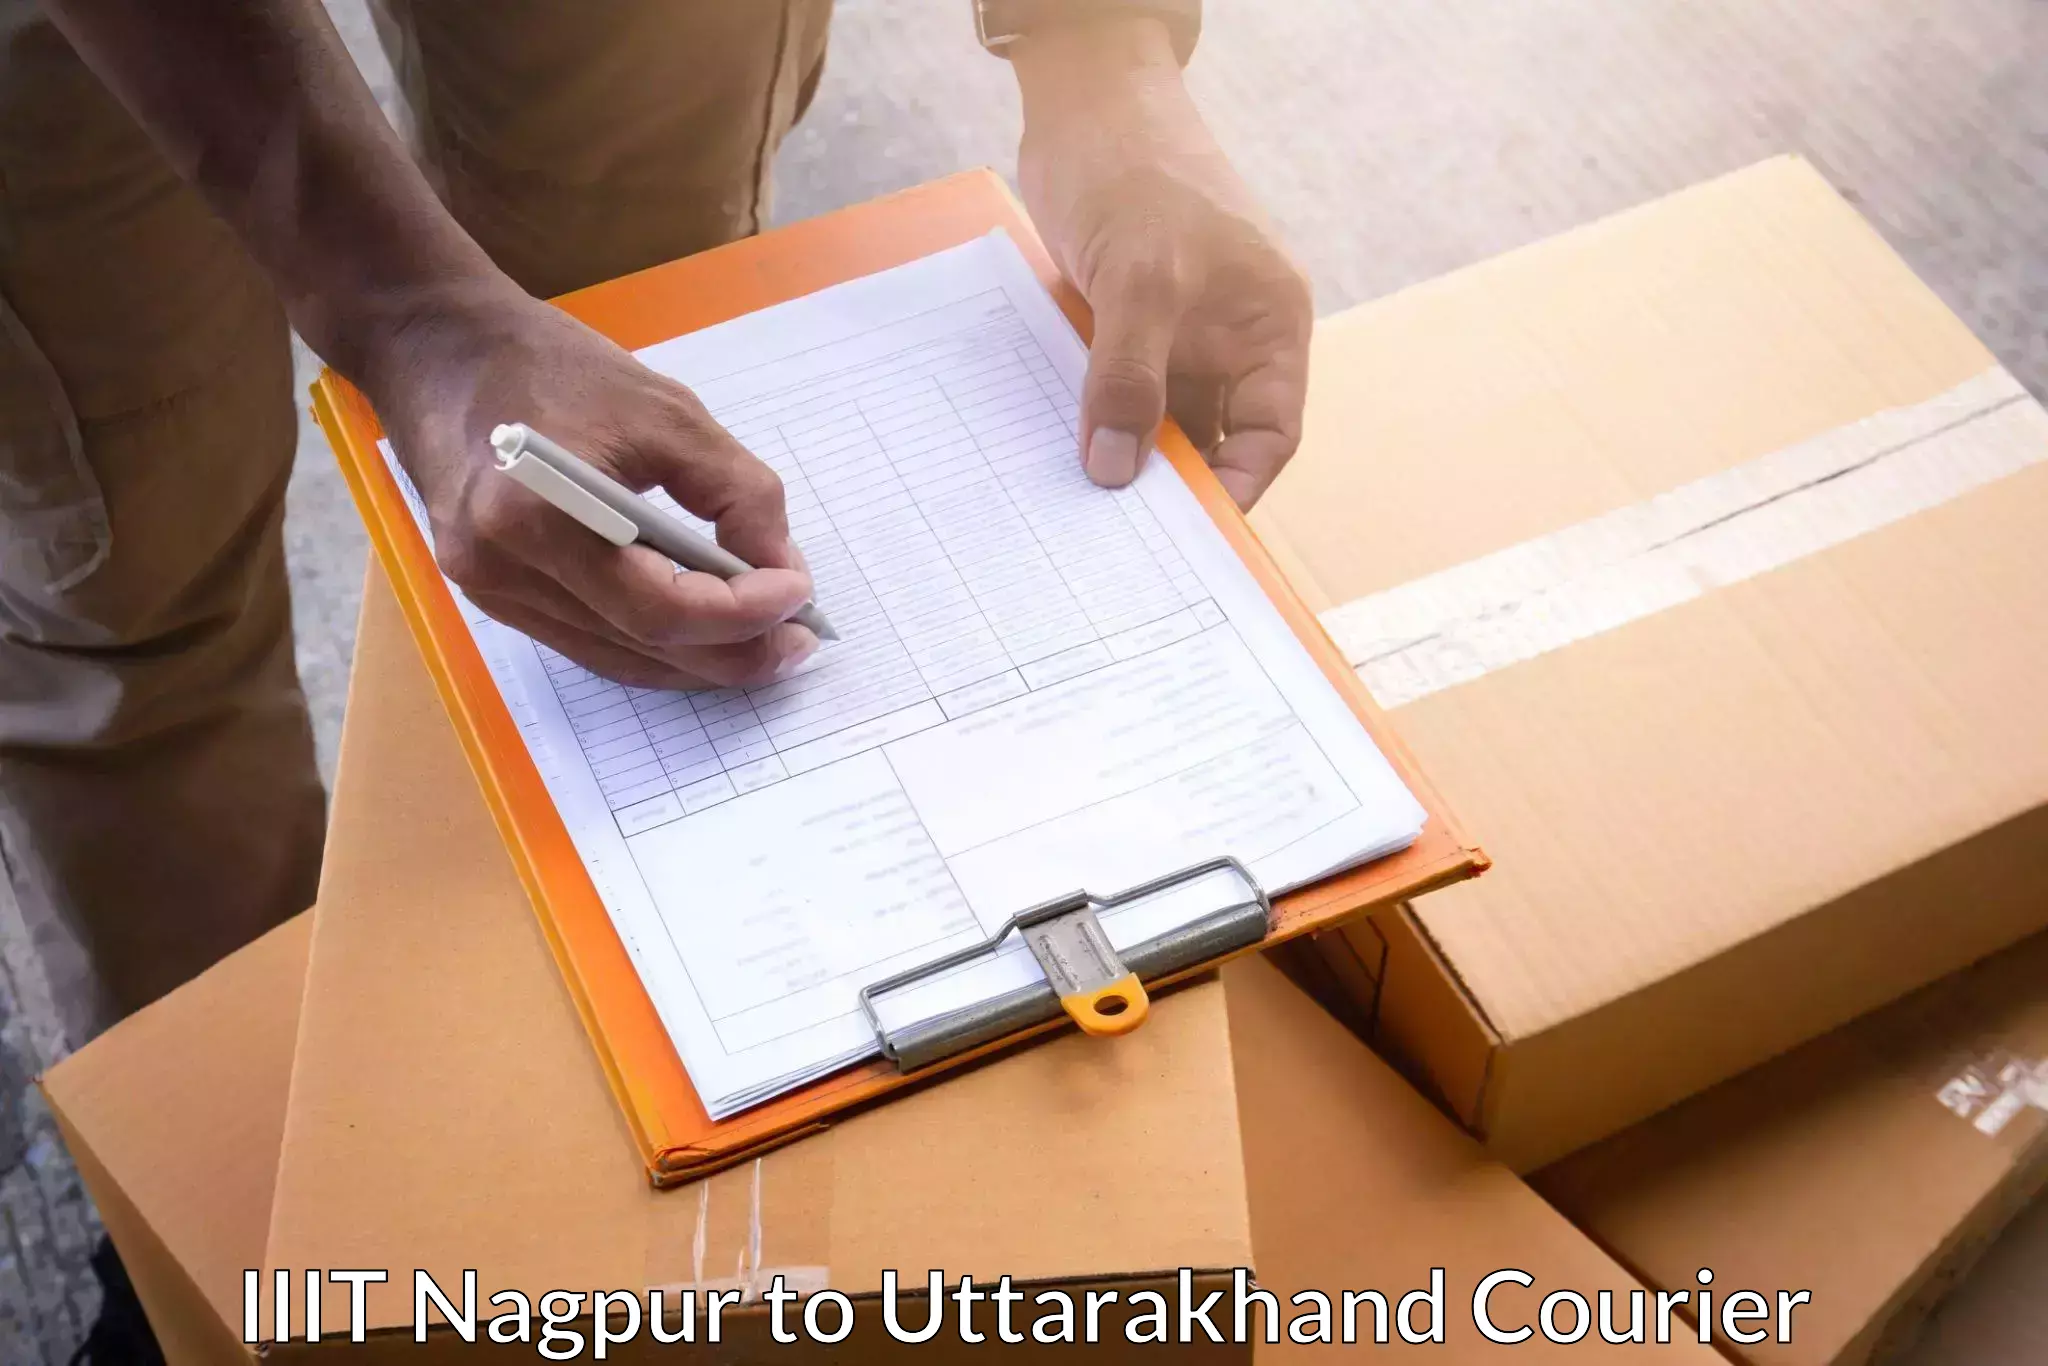 Affordable parcel service IIIT Nagpur to Lansdowne